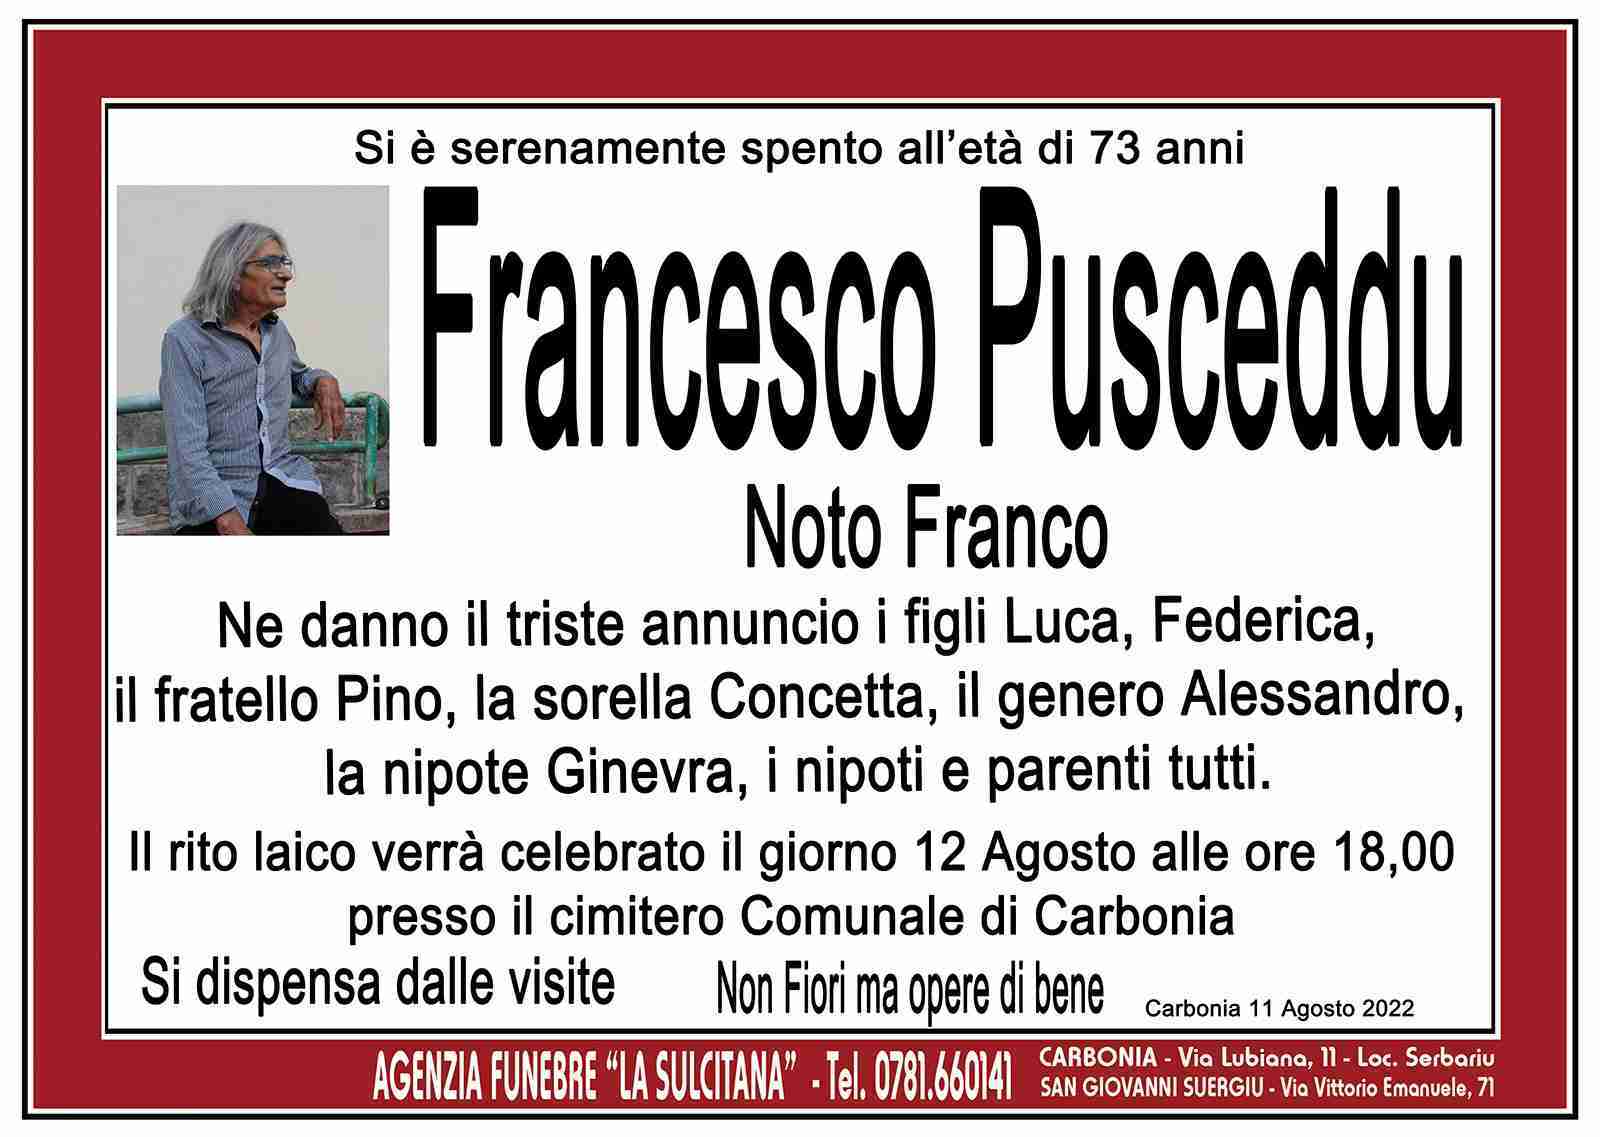 Francesco Pusceddu